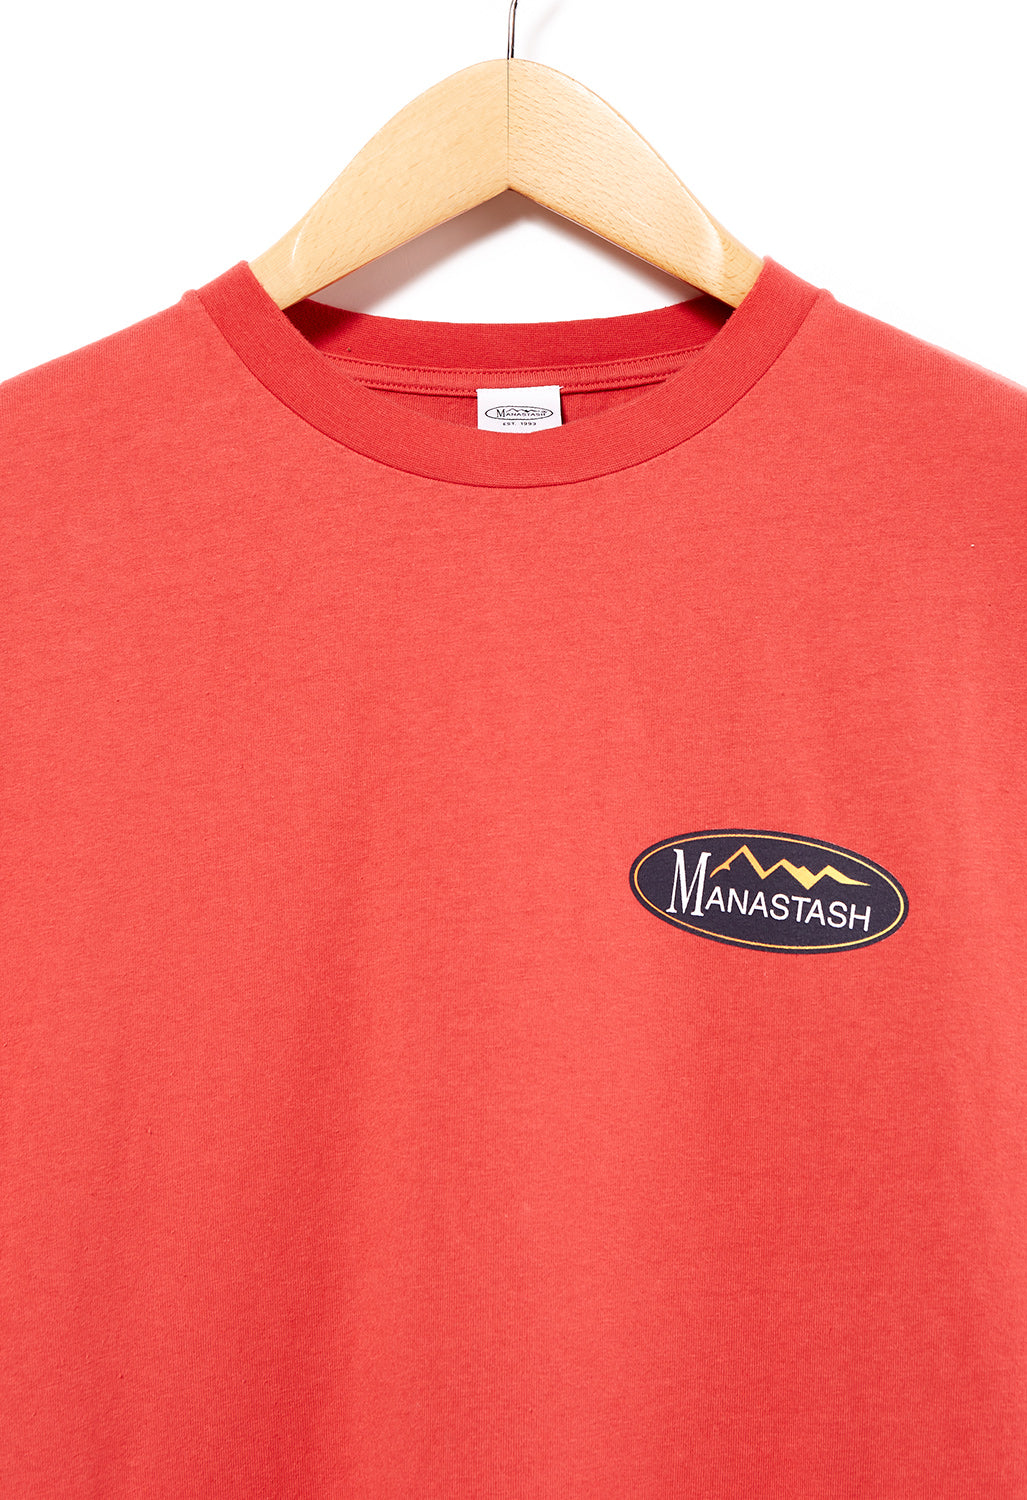 Manastash Men's Original Logo T-Shirt - Red